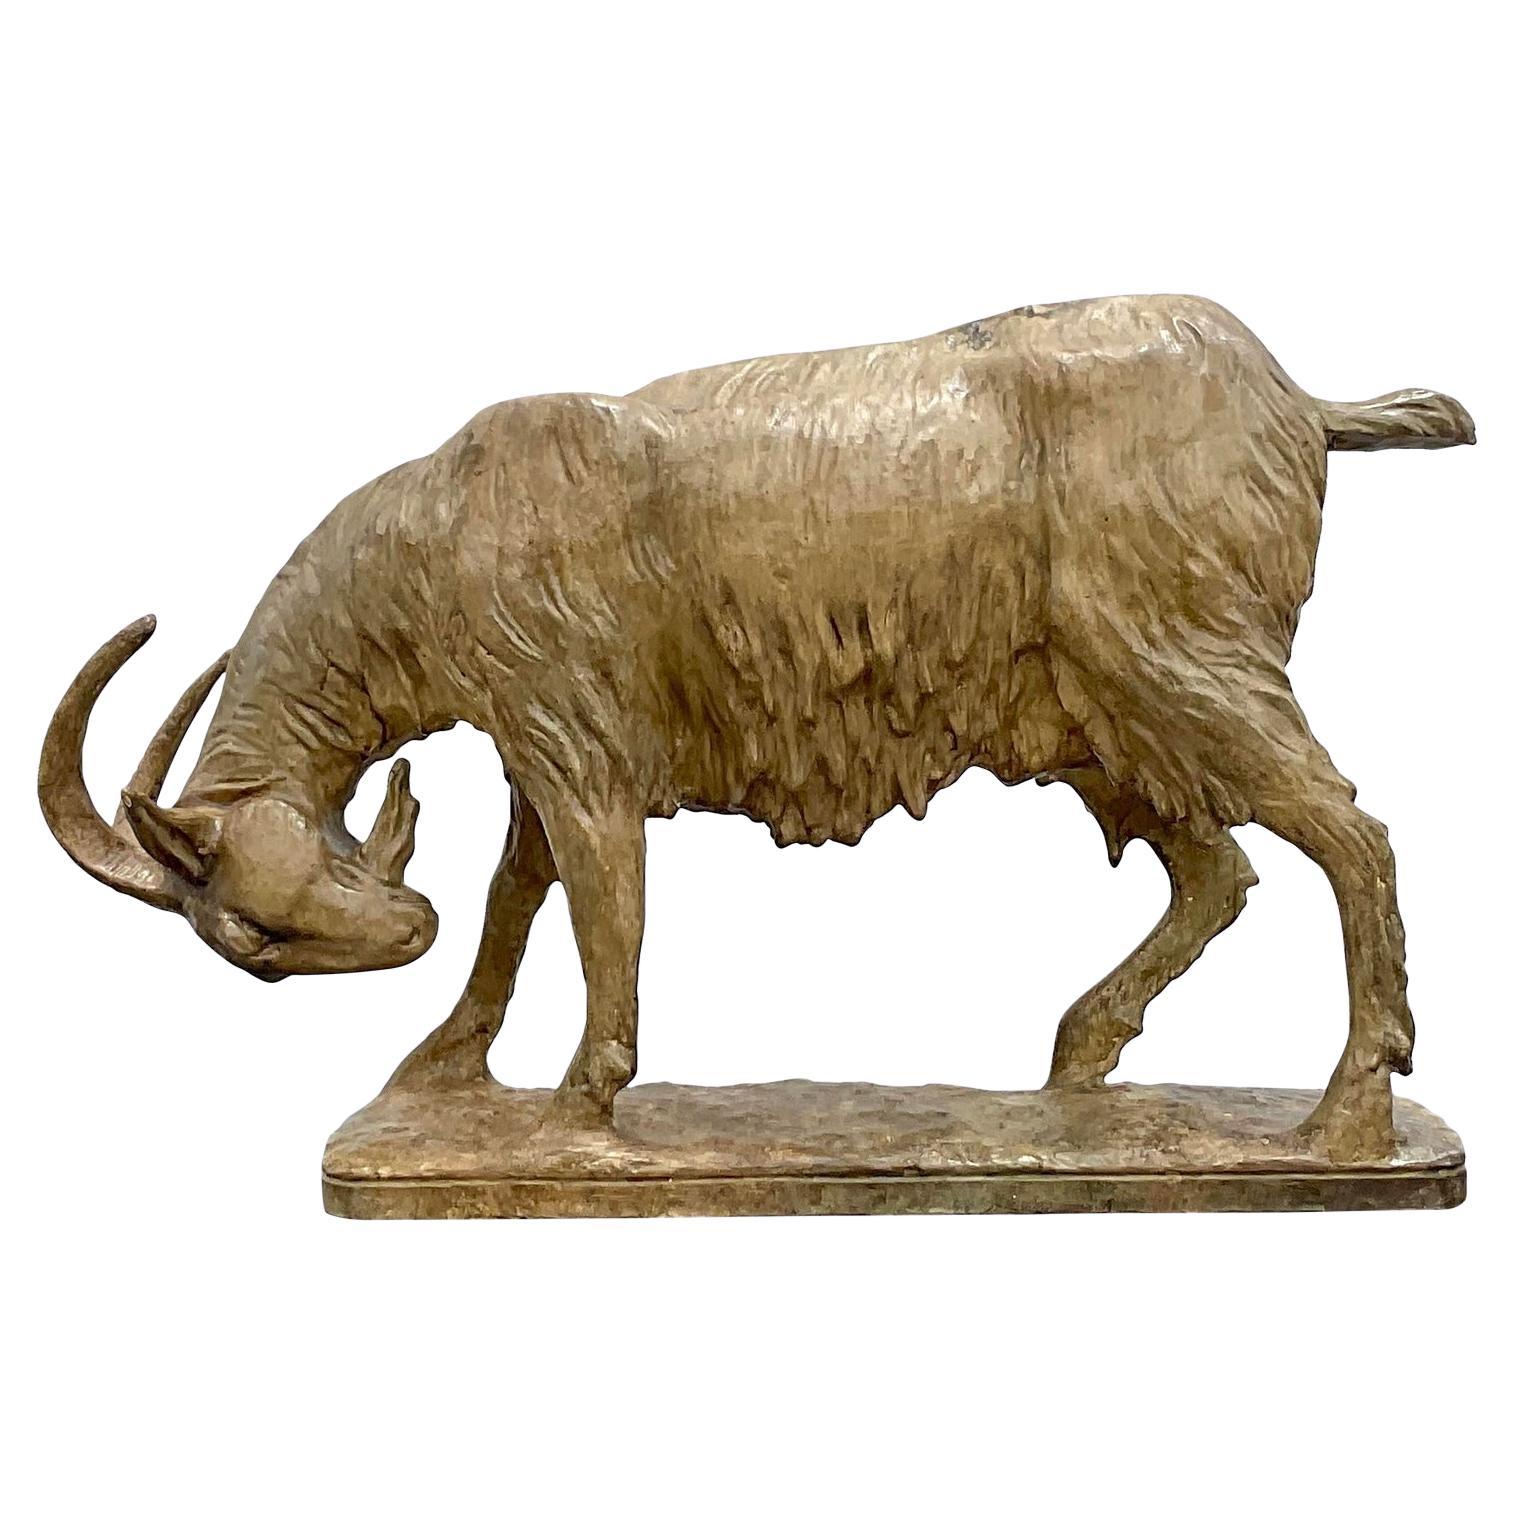 Vintage French Terra Cotta Goat Sculpture